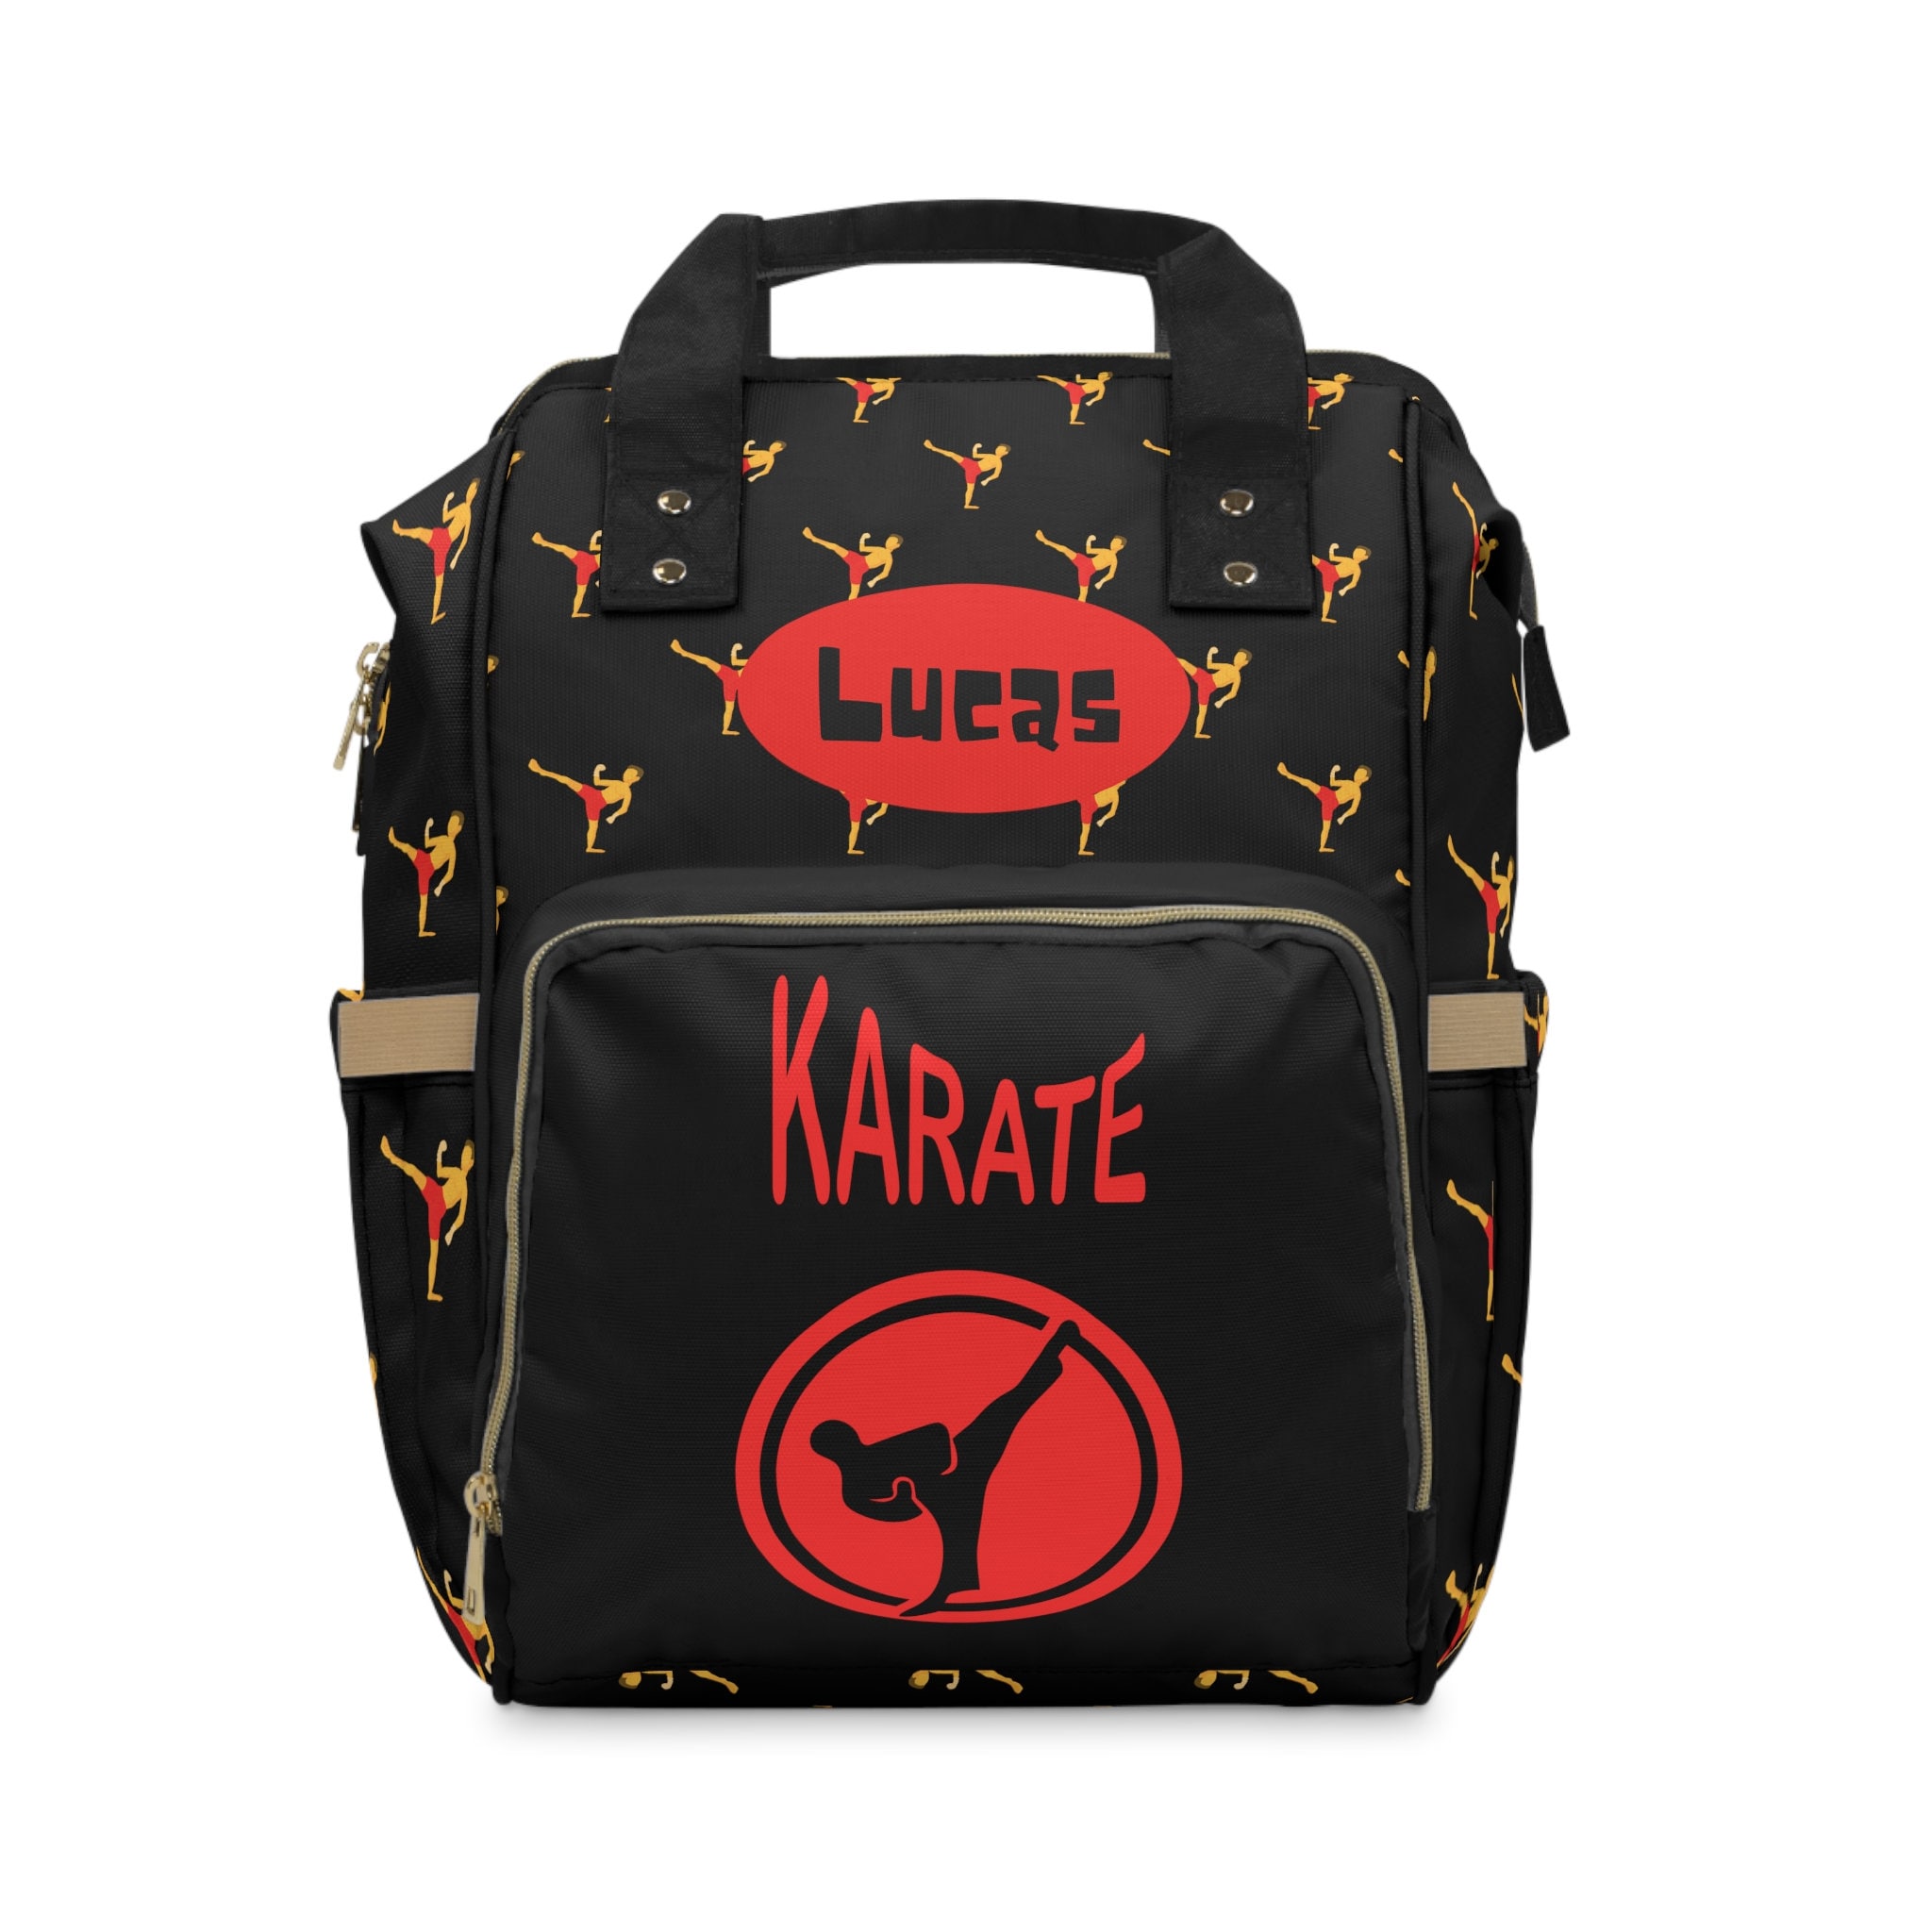 Kyokushin Karate duffle bag - Kyokushin Goods